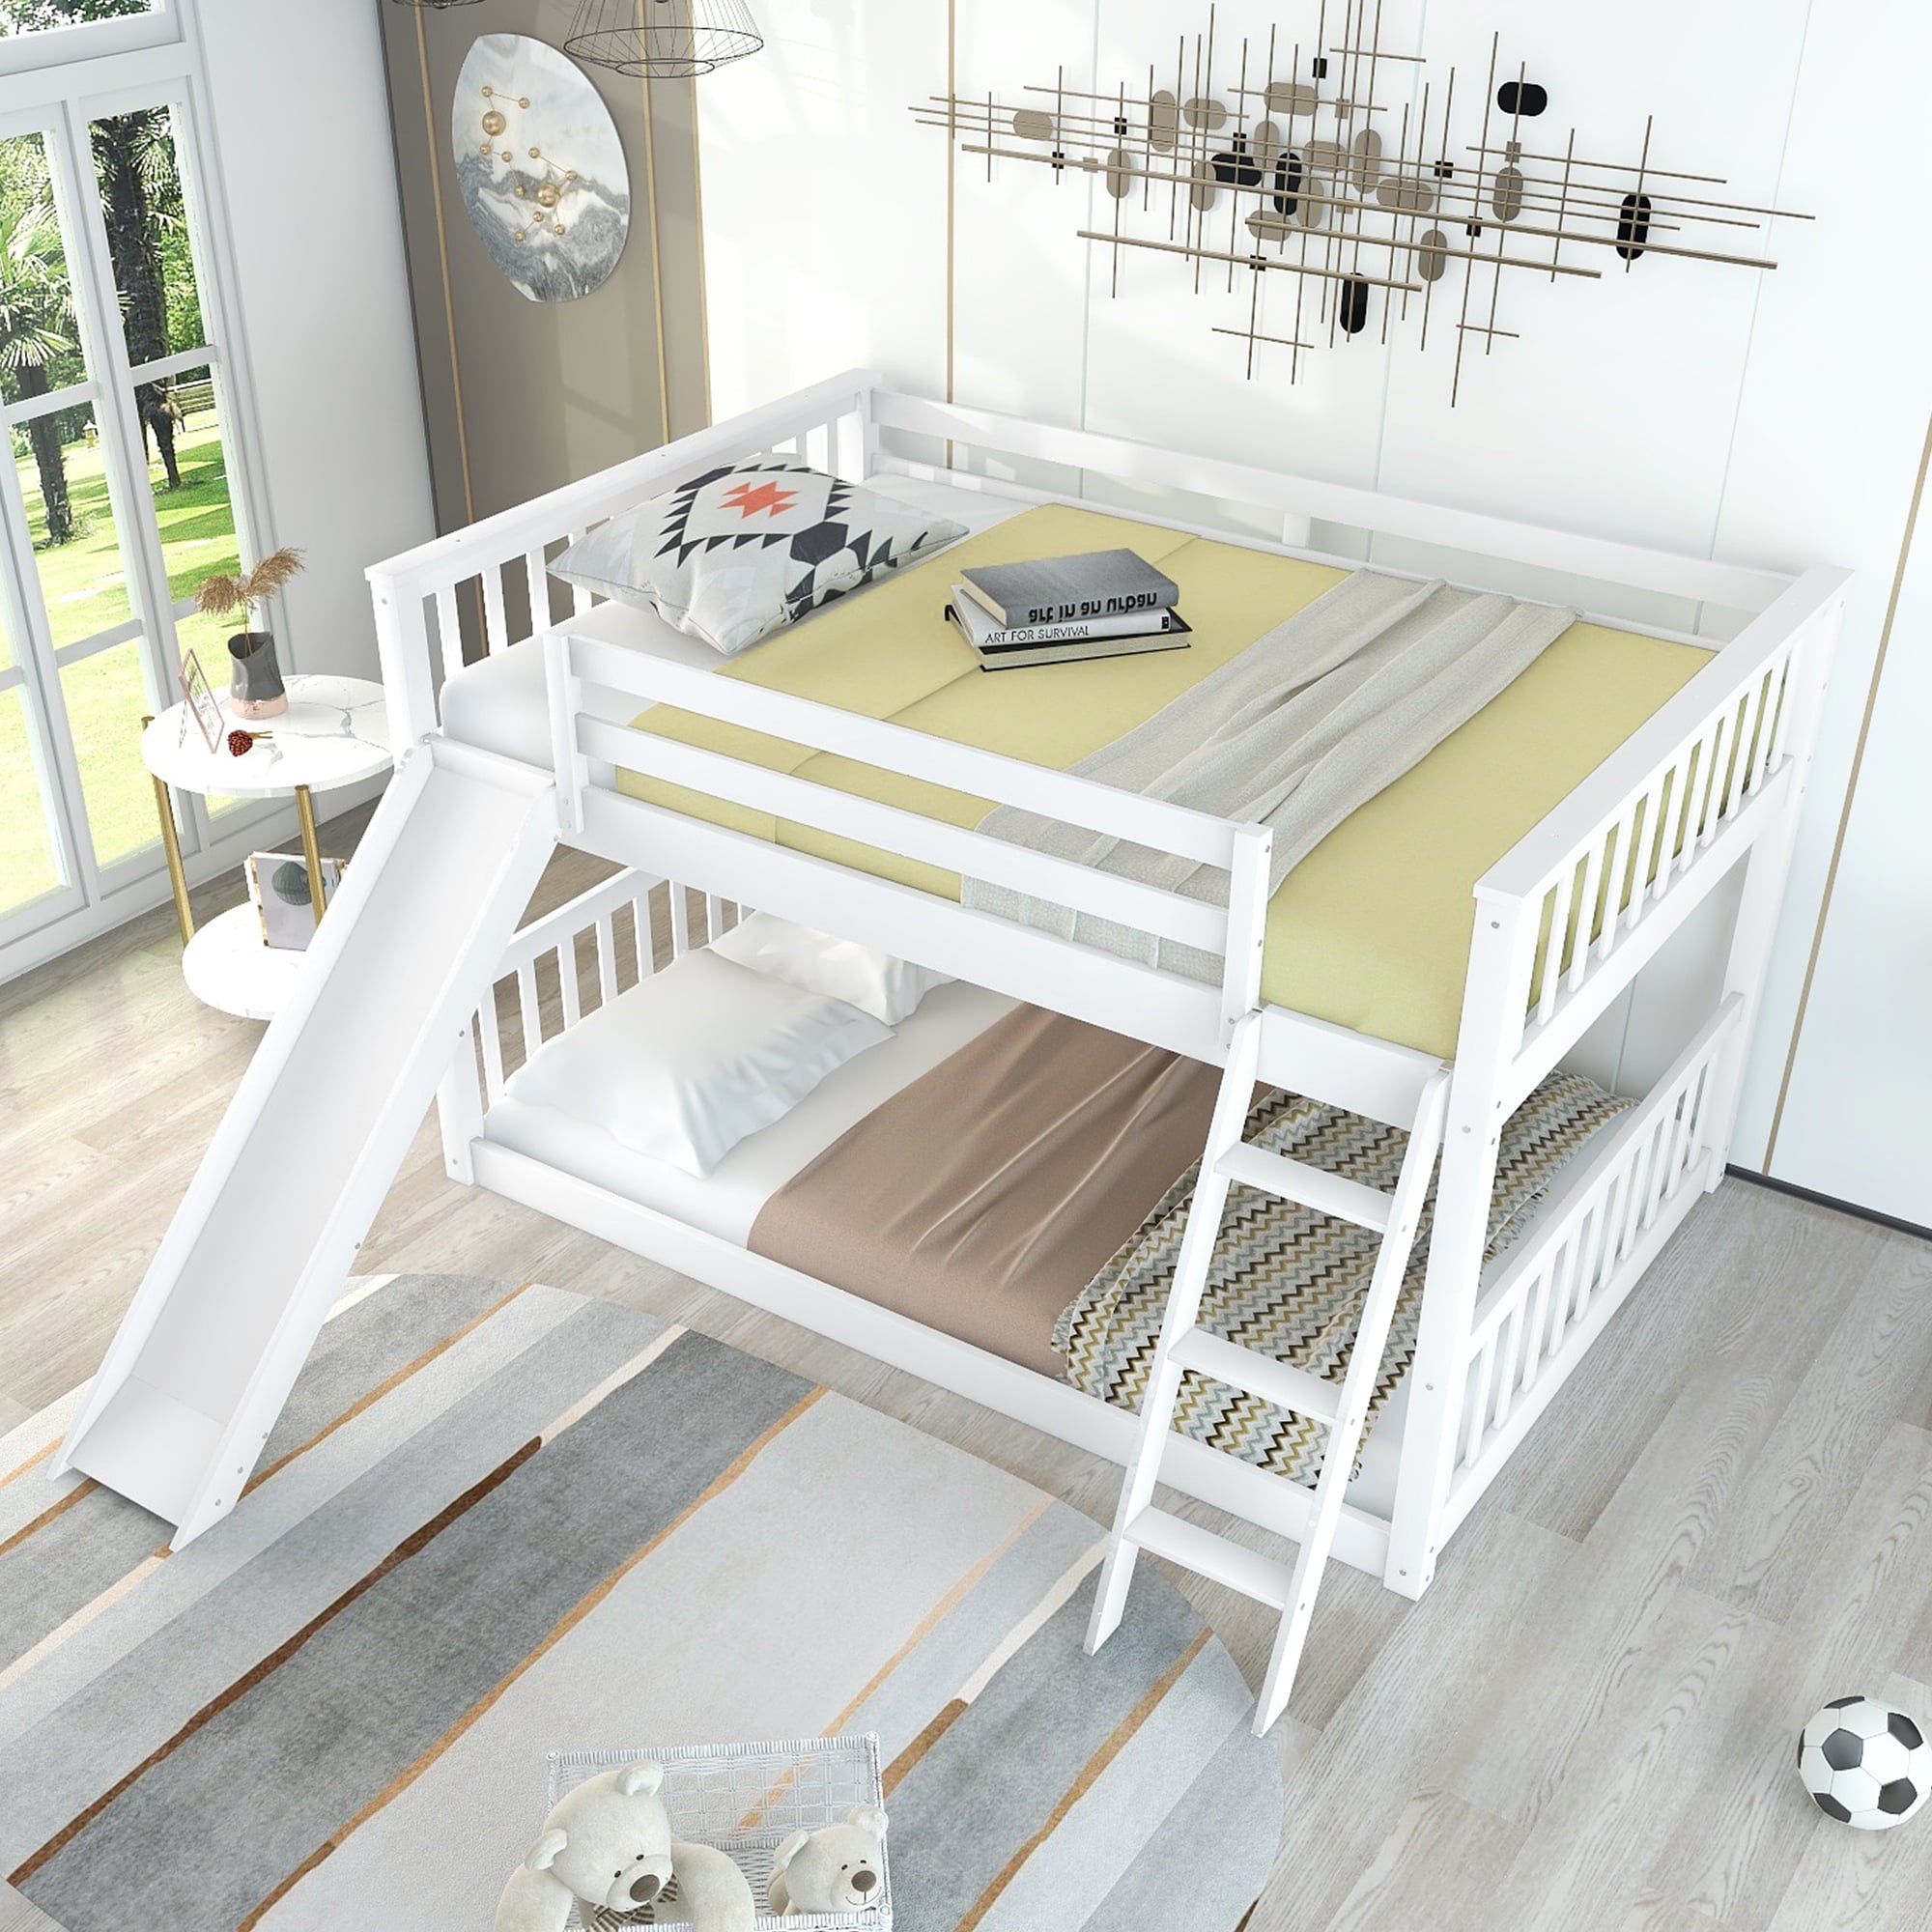 Euroco Full over Full Floor Bunk Bed with Slide and Ladder for Kids Bedroom, White